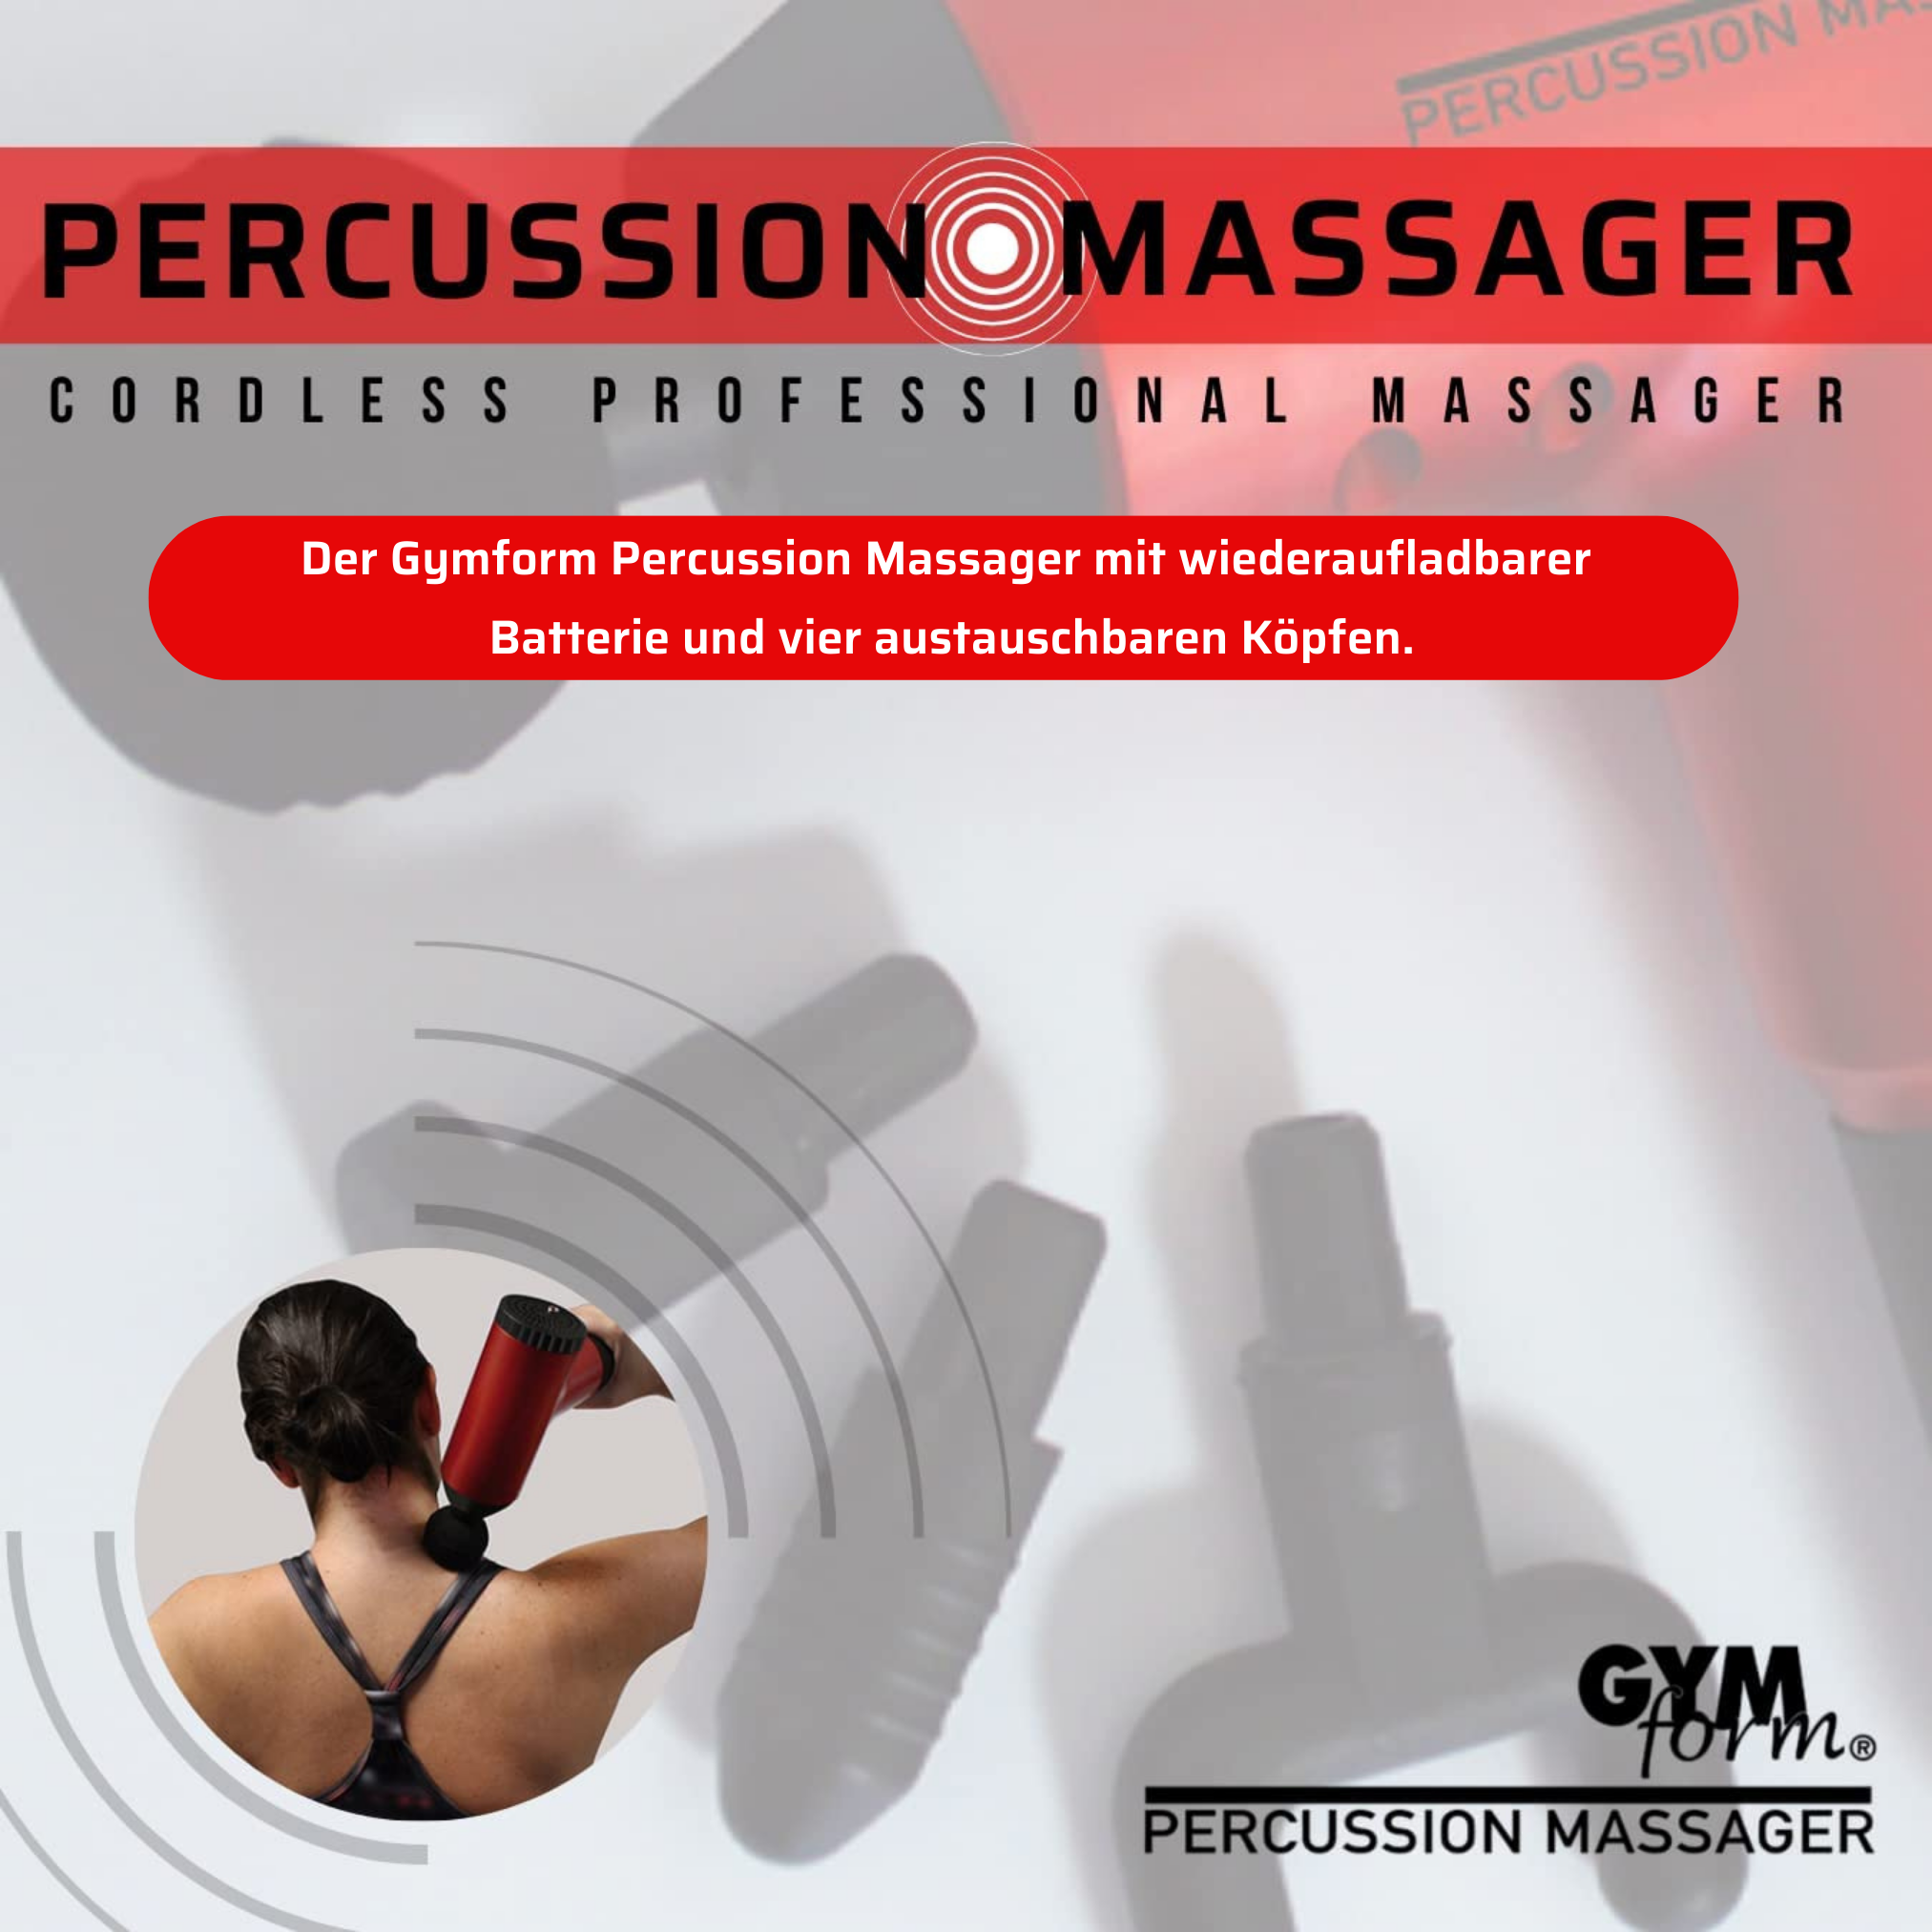 Massage GYMFORM Massagepistole Cushion Percussion Massager